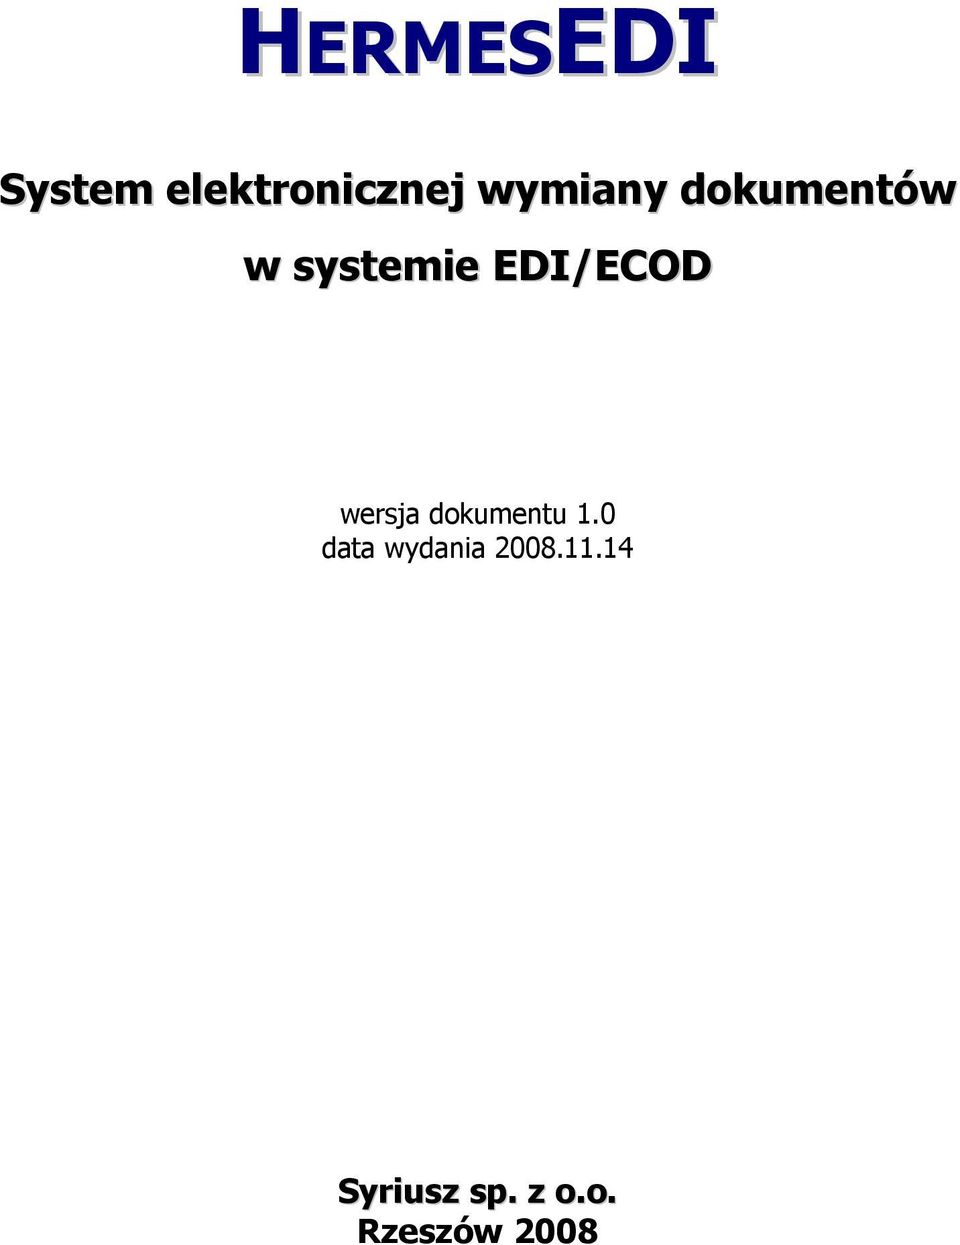 EDI/ECOD wersja dokumentu 1.